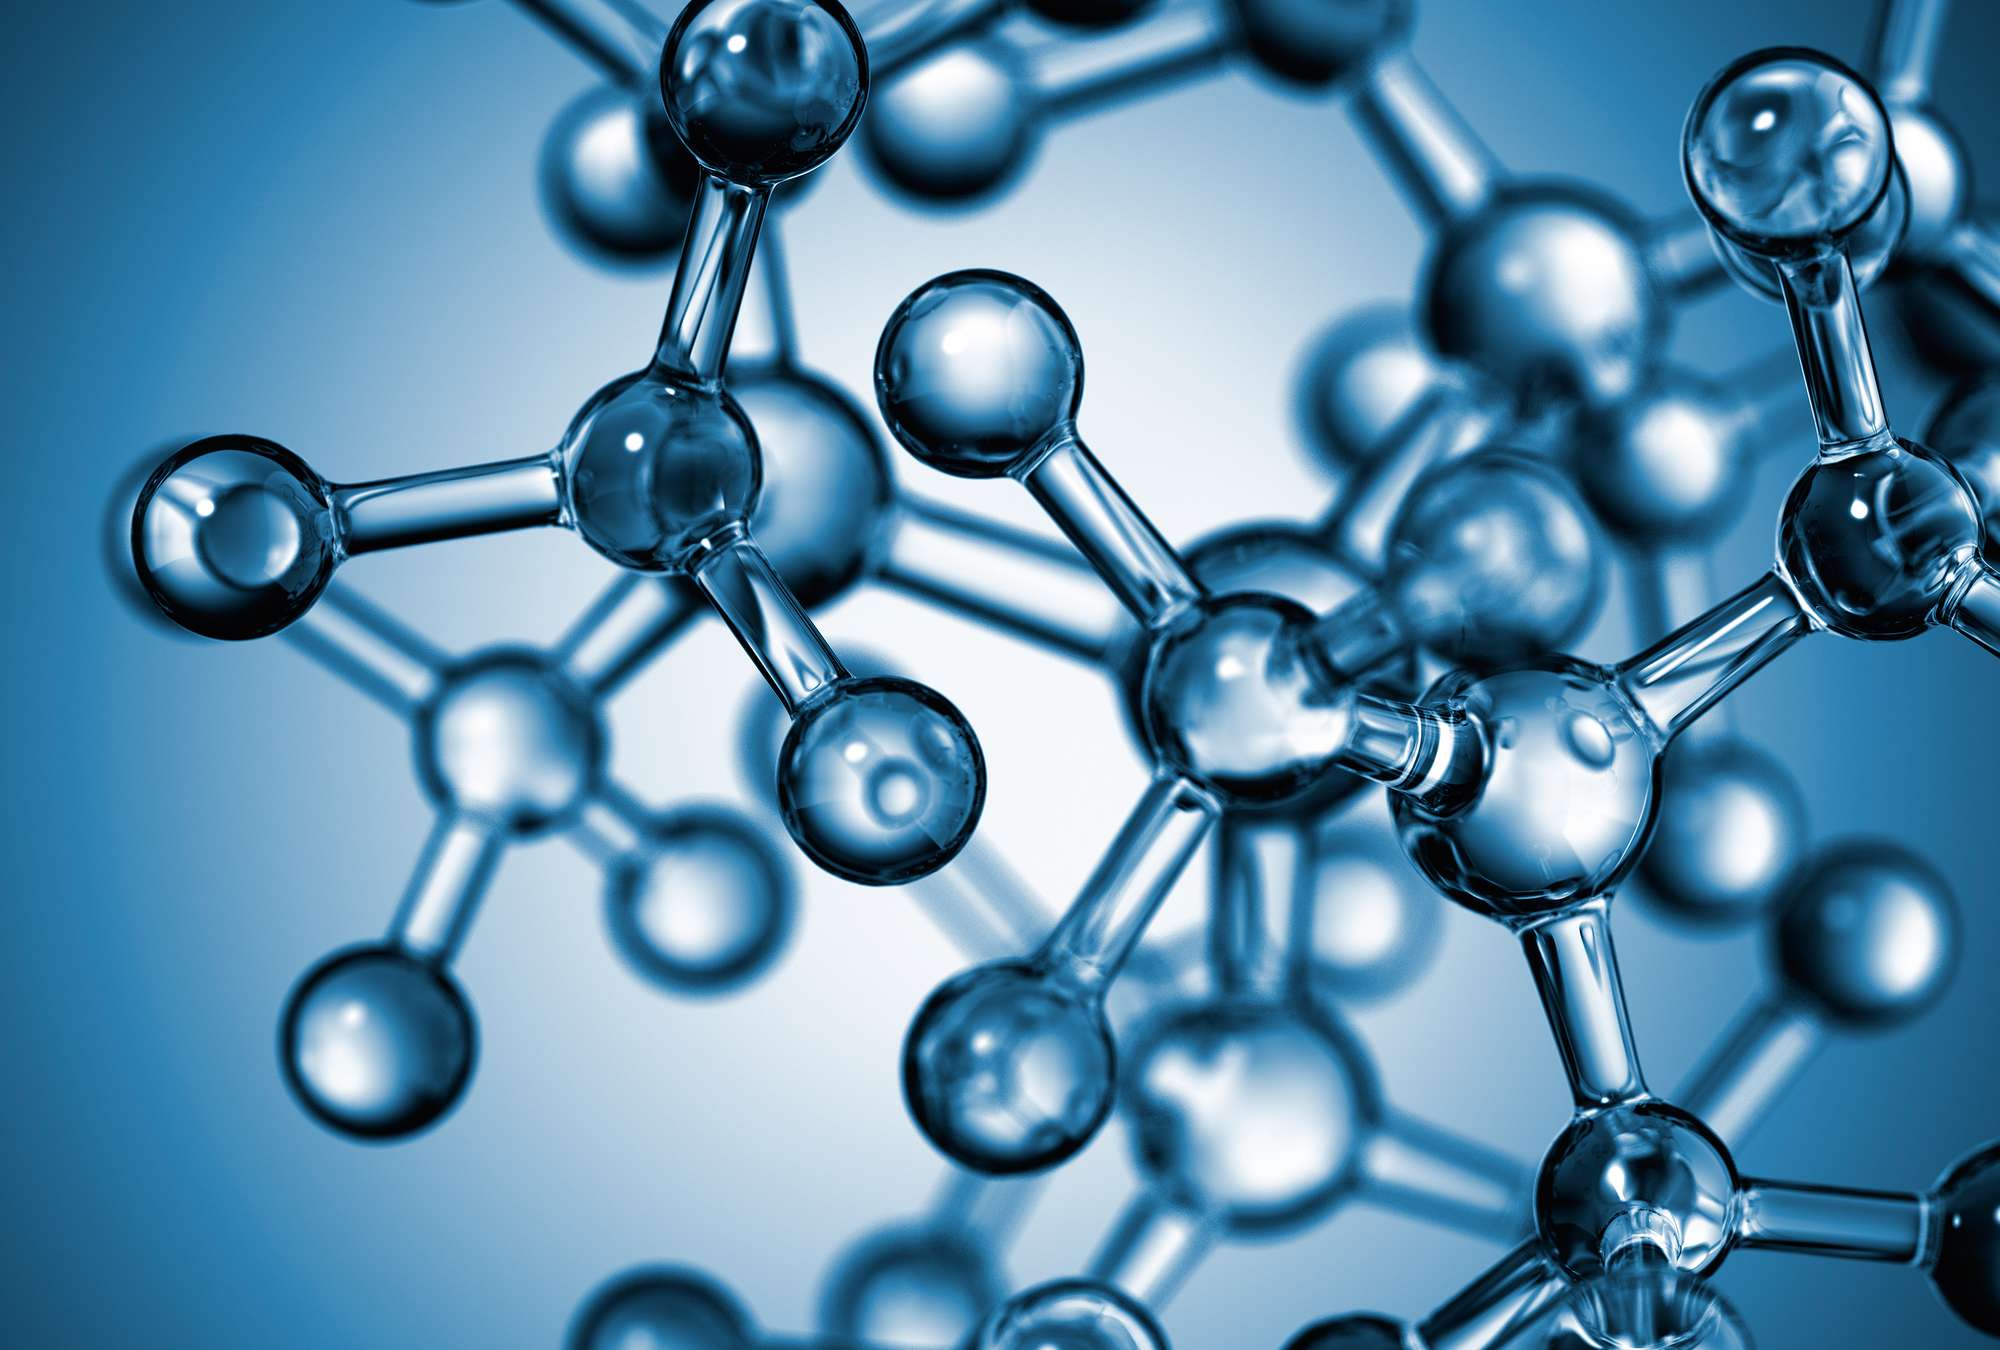             Molecular compounds mural - Graphic design
        